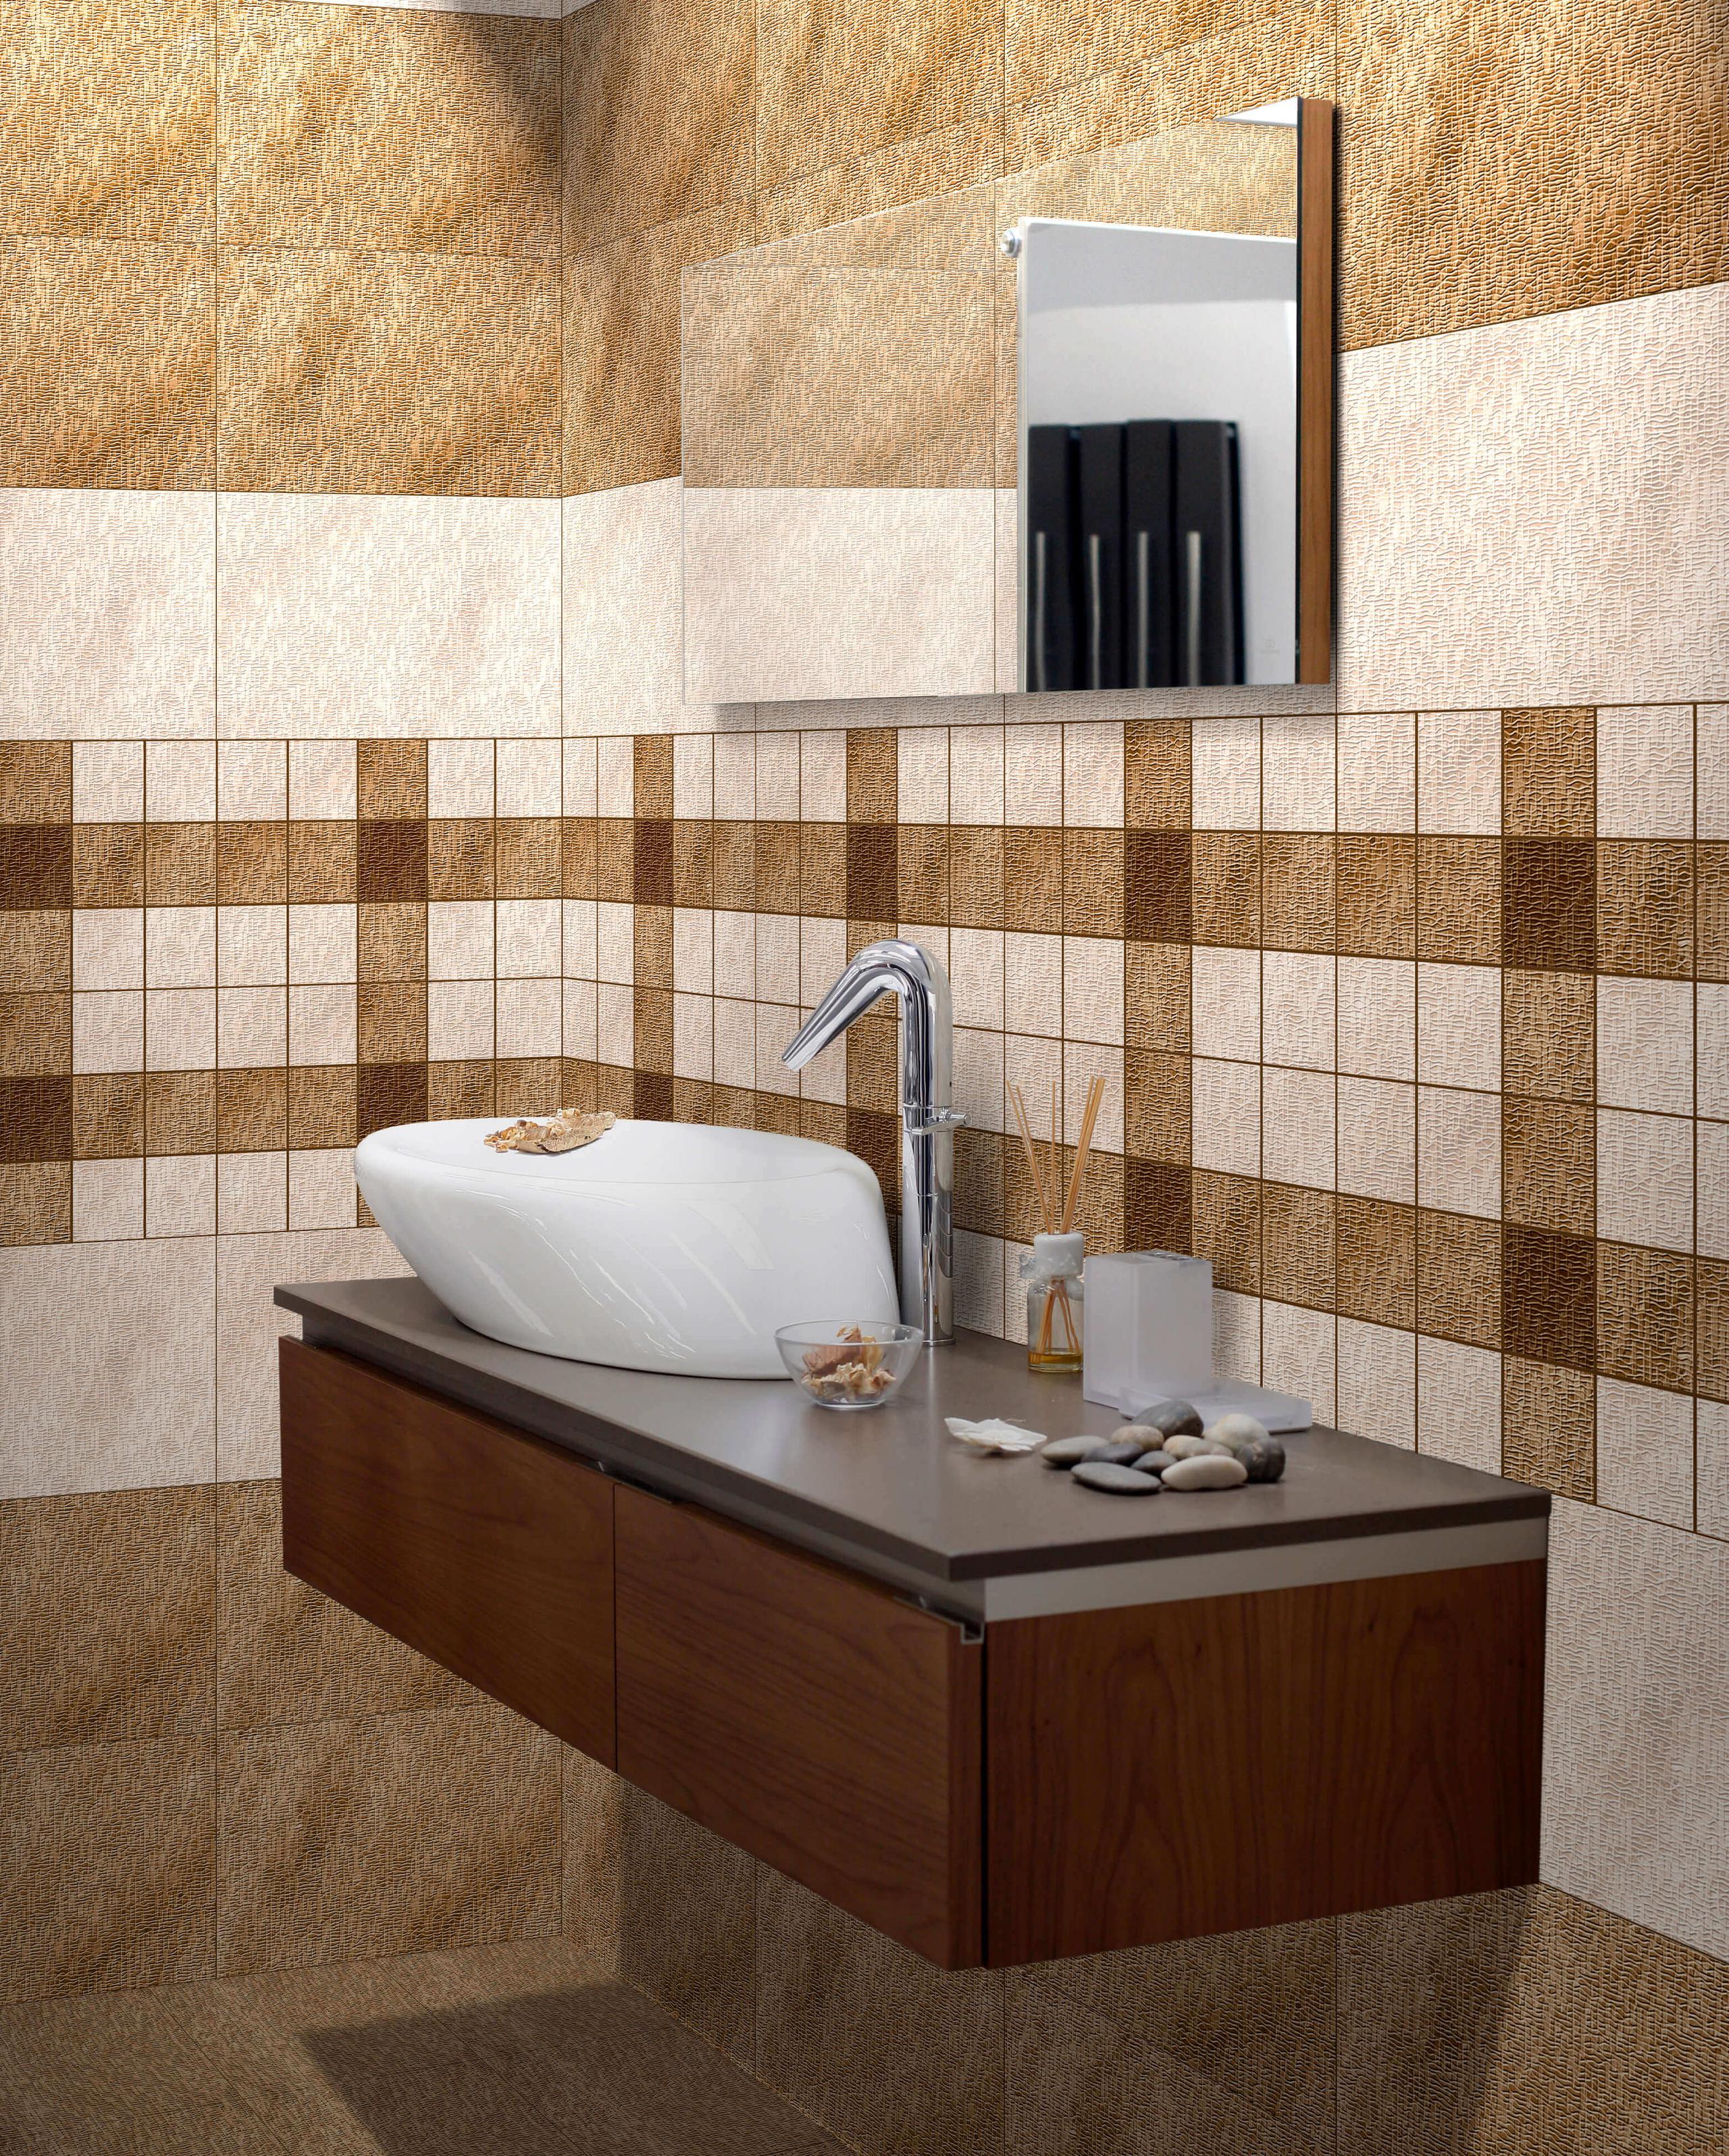 Texture Tiles for Bathroom Tiles, Kitchen Tiles